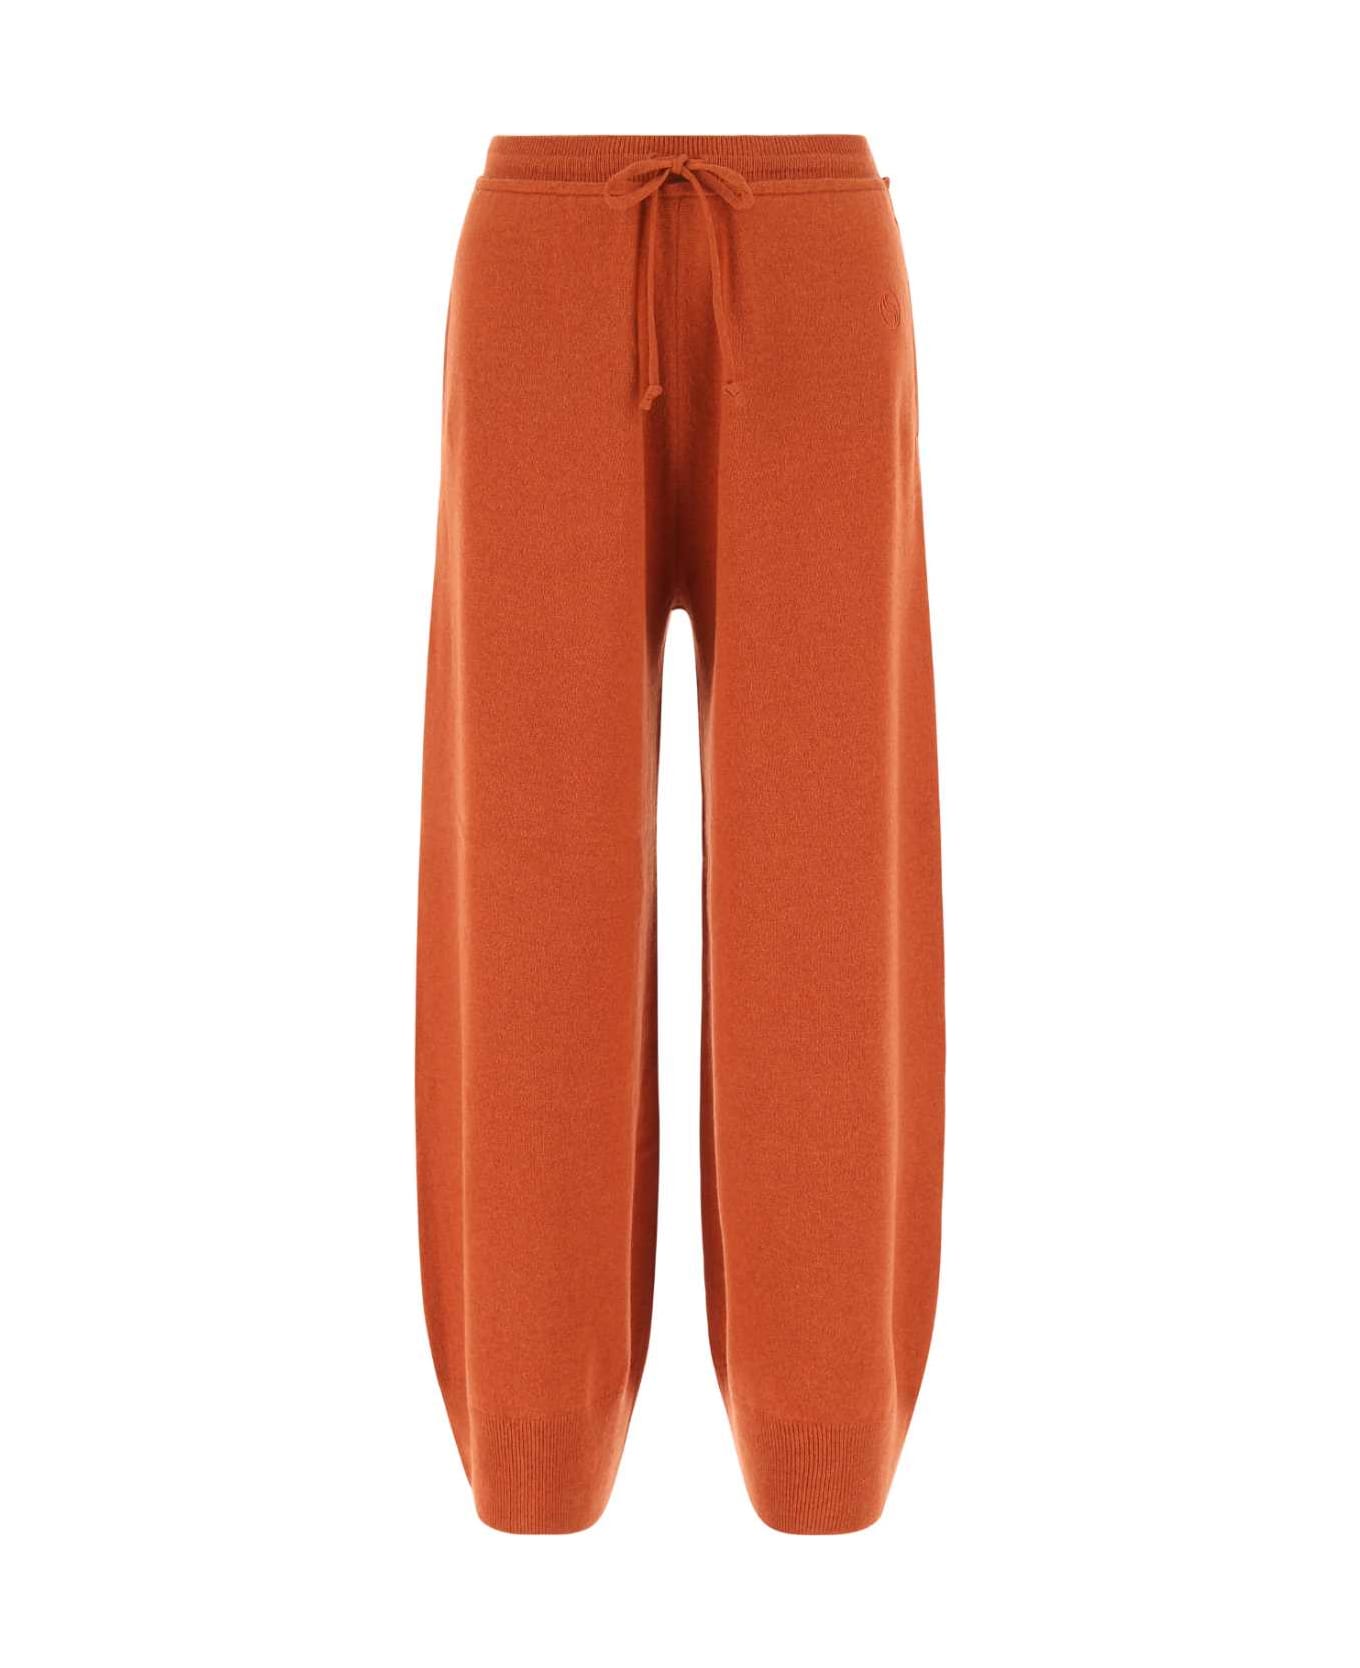 Stella McCartney Copper Cashmere Blend Wide-leg Pant - 6302 スウェットパンツ